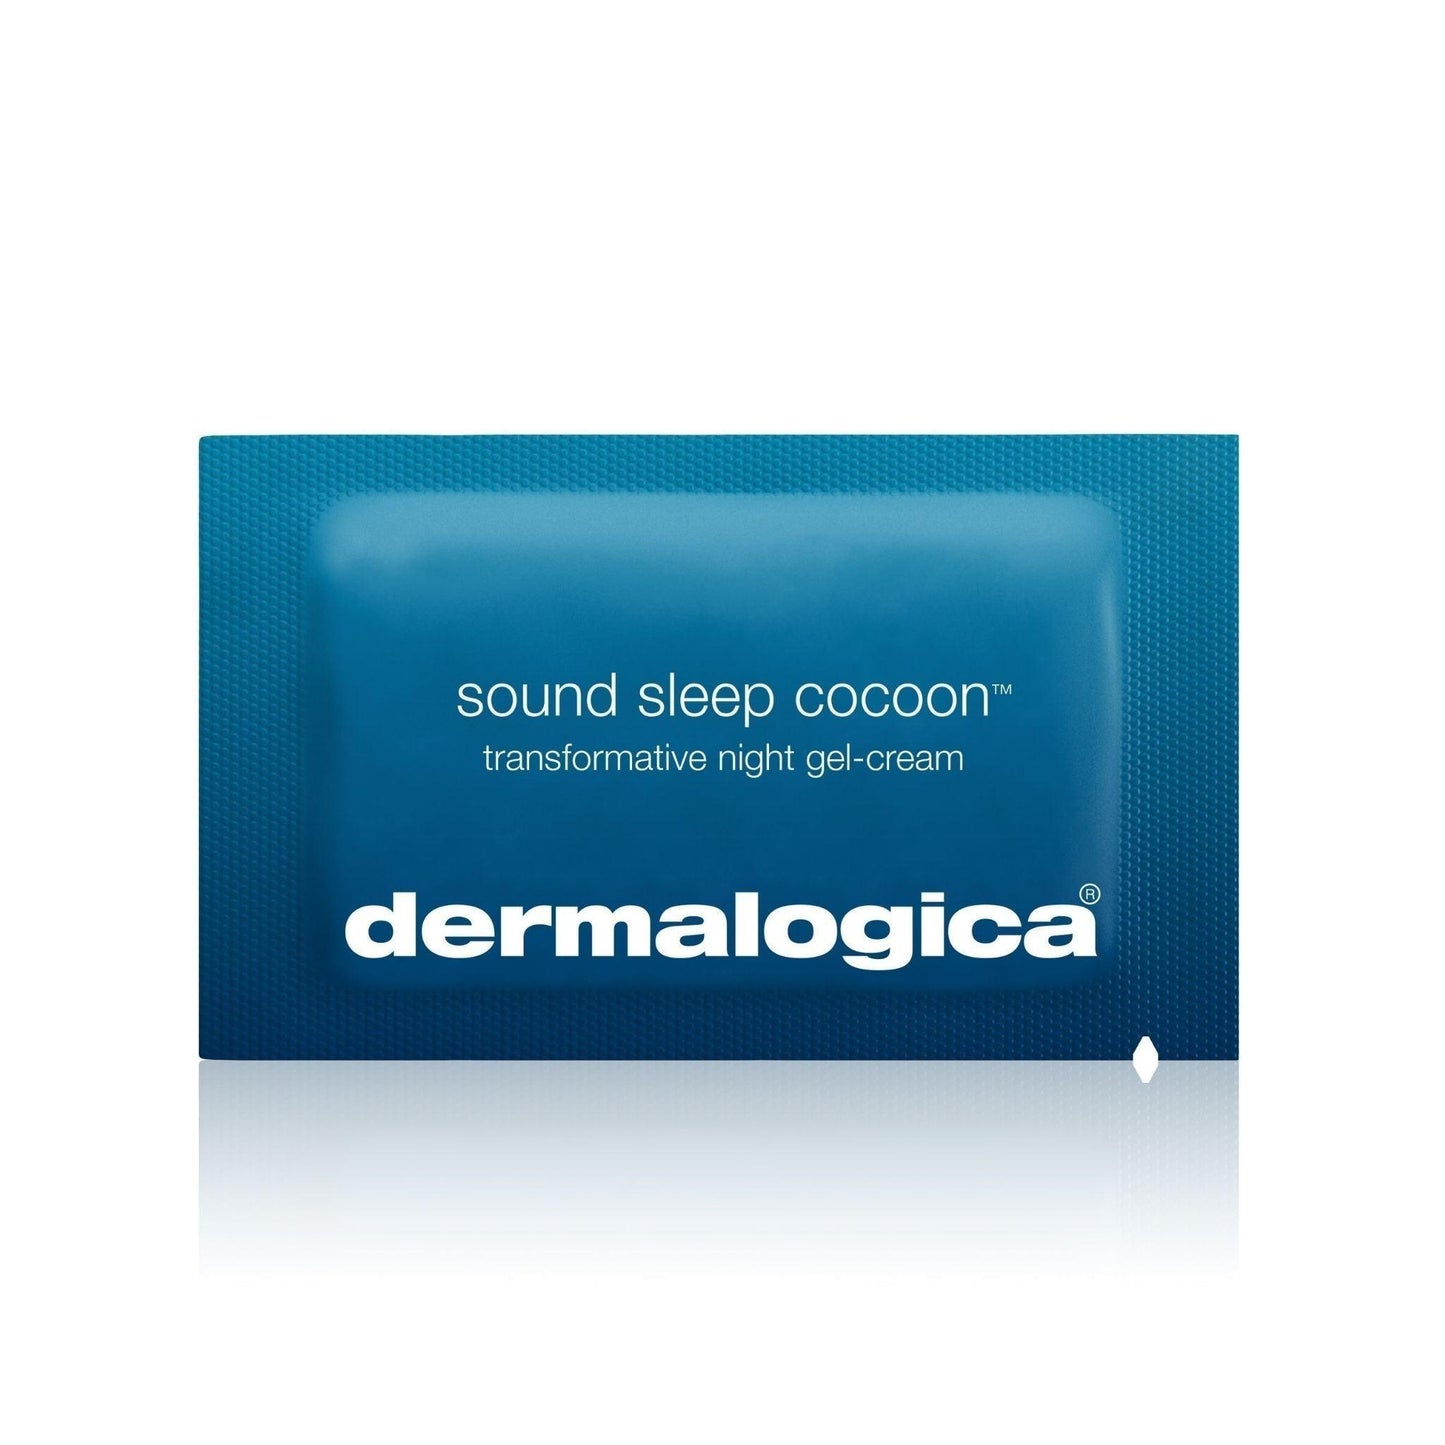 sound sleep cocoon (sample) - Dermalogica Singapore